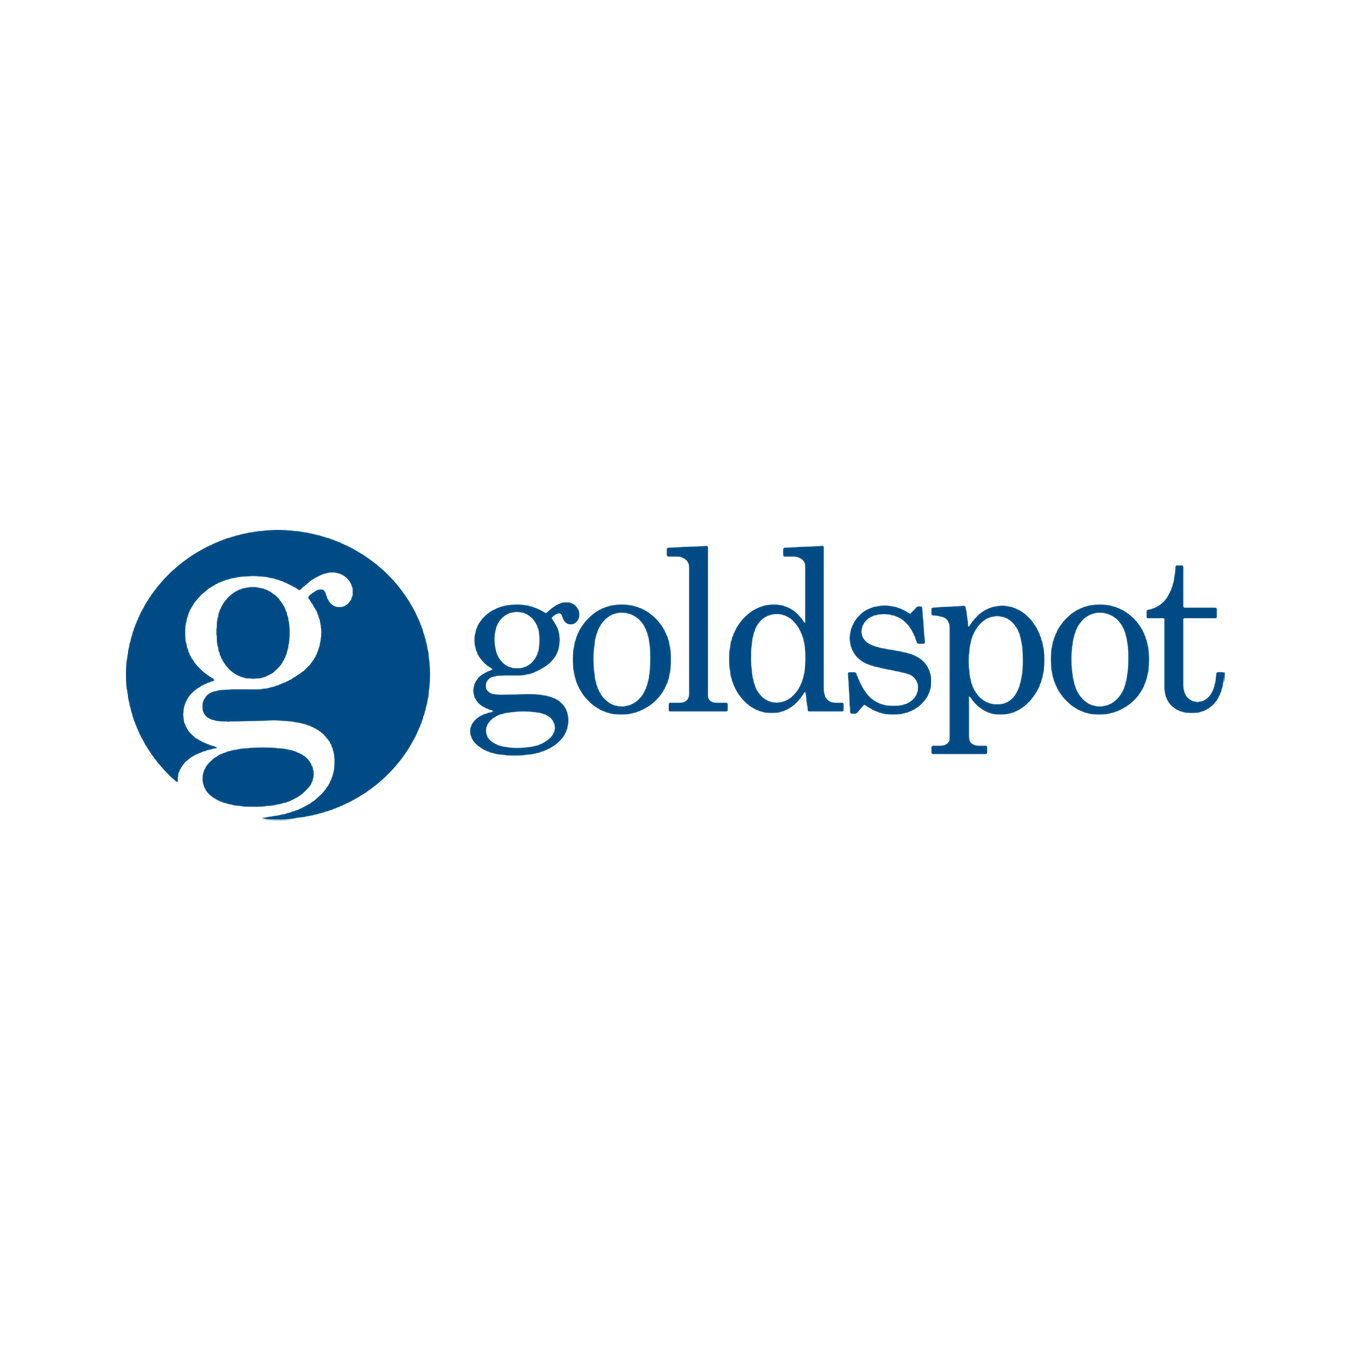 Goldspot